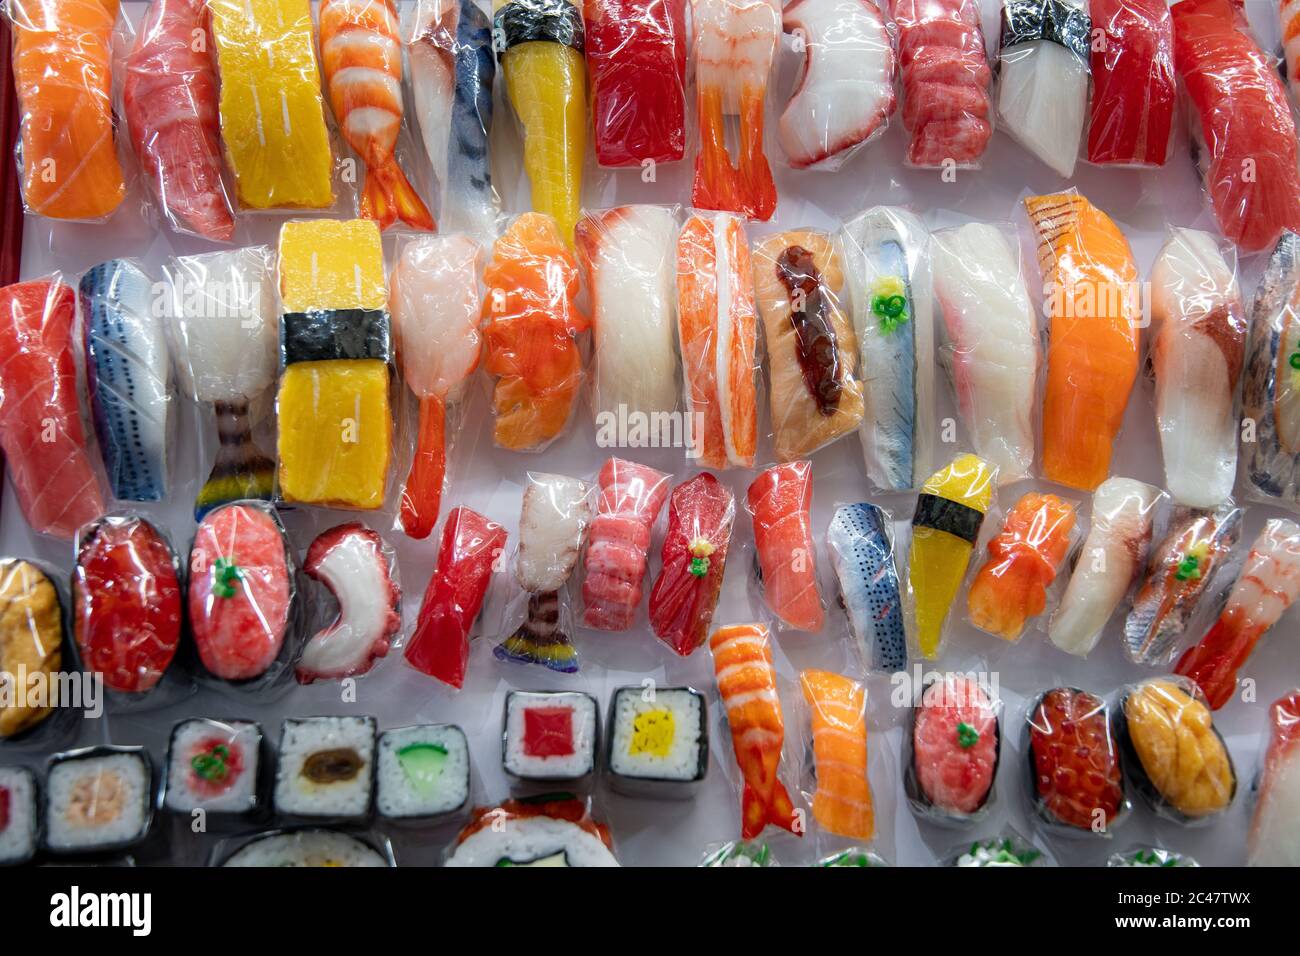 https://c8.alamy.com/comp/2C47TWX/close-up-on-sushi-and-onigiri-magnet-artificial-food-made-by-wax-shop-window-display-souvenir-restaurant-menu-food-sample-kappabashi-dori-tokyo-2C47TWX.jpg